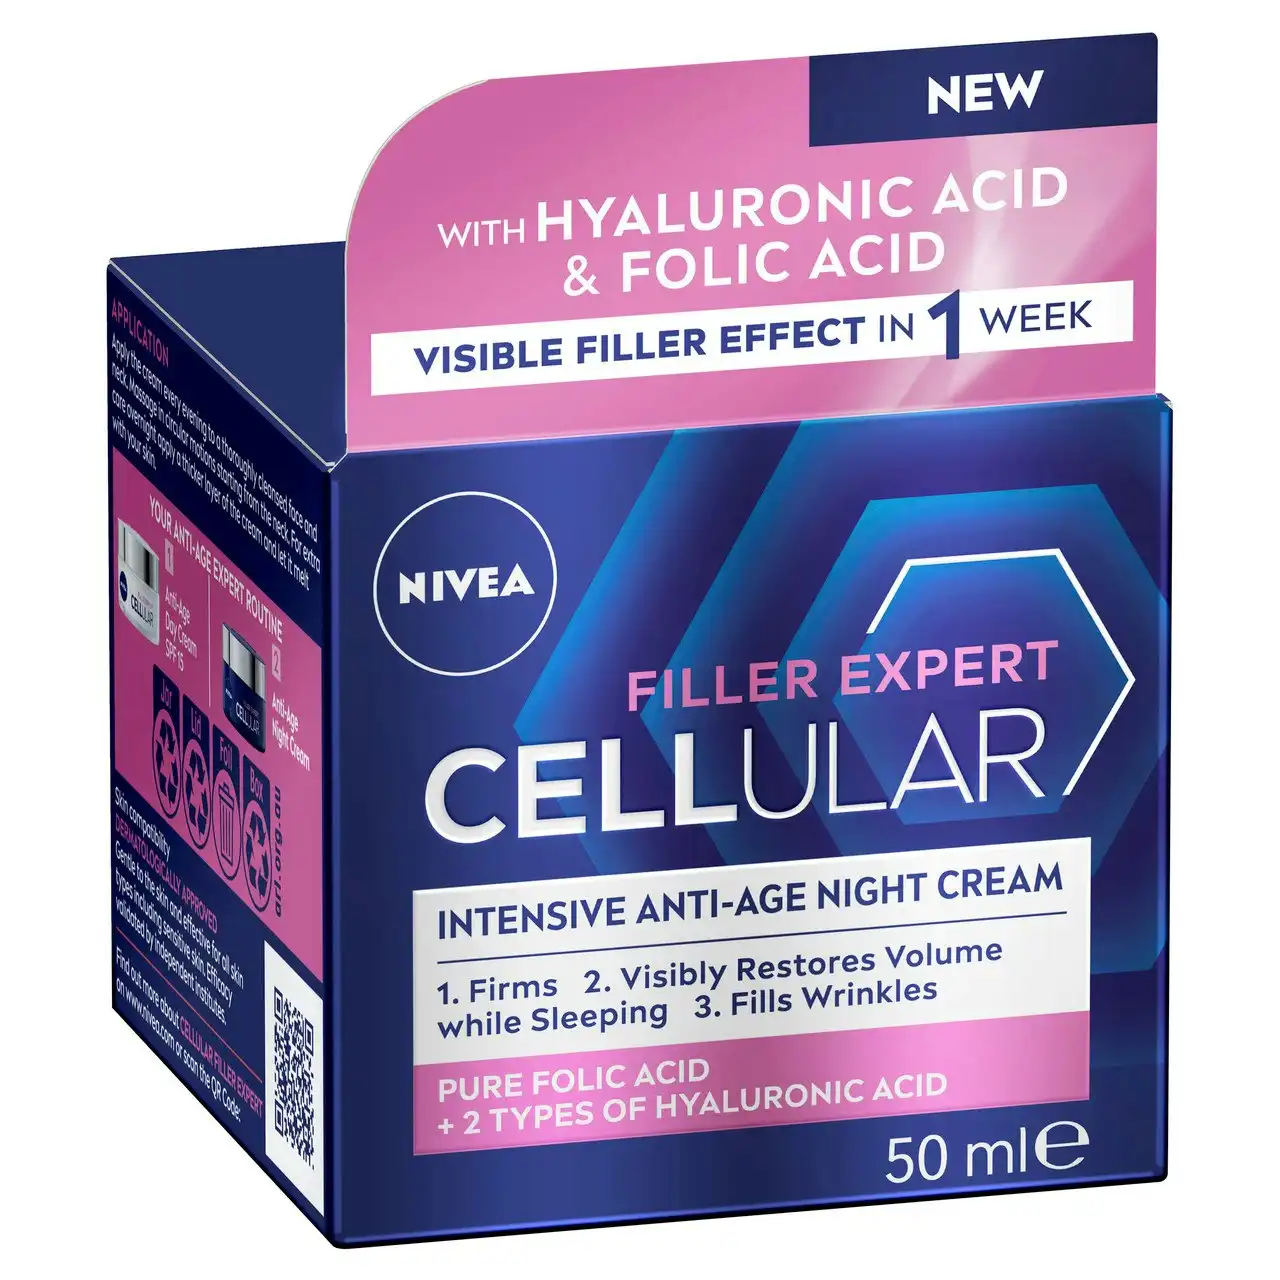 Nivea Cellular Filler Expert Anti-Age Night Cream